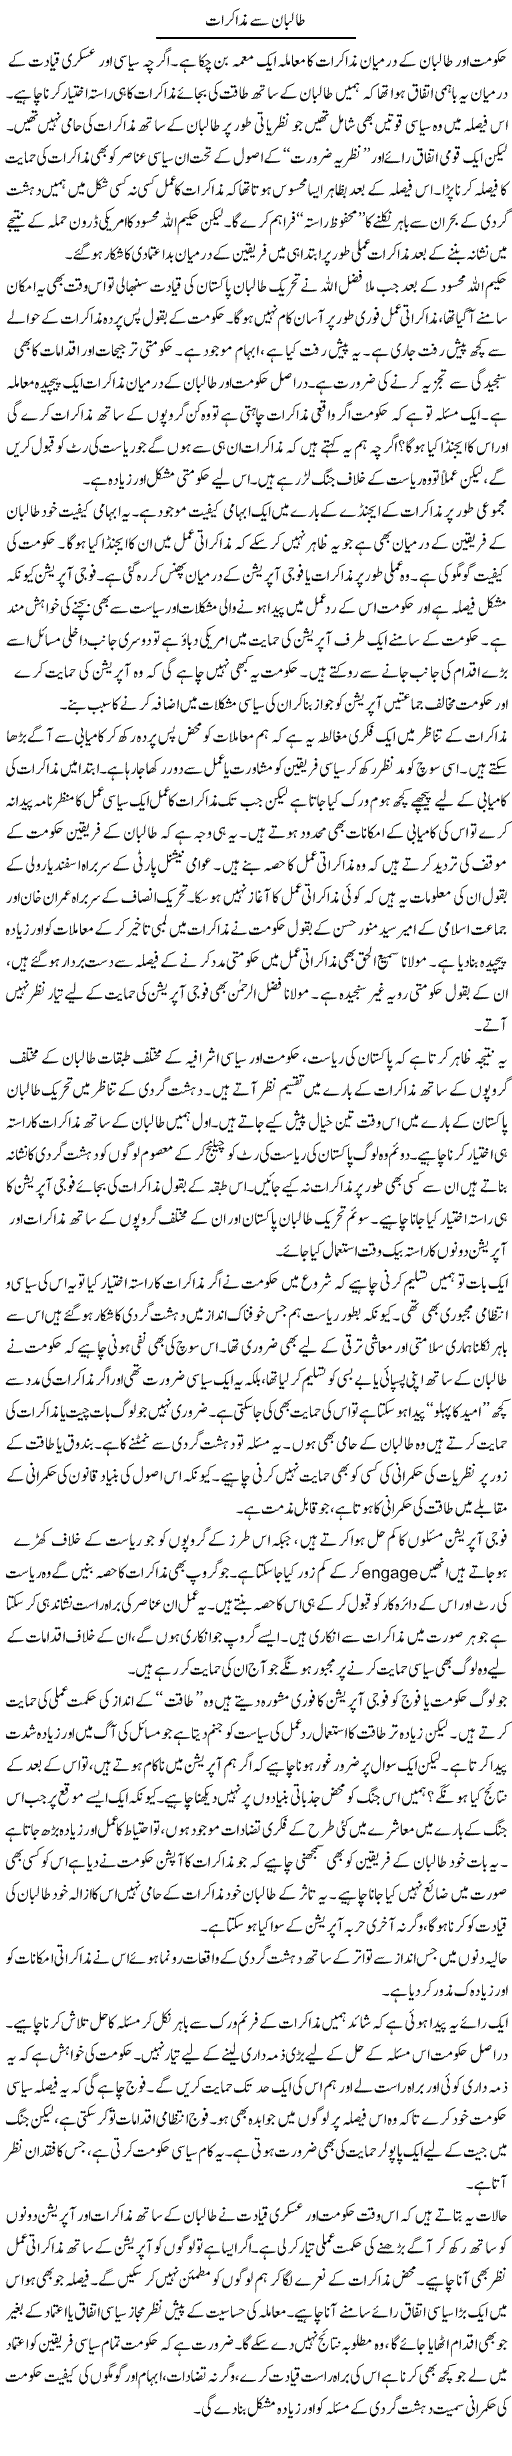 Taliban Say Muzakrat | Salman Abid | Daily Urdu Columns